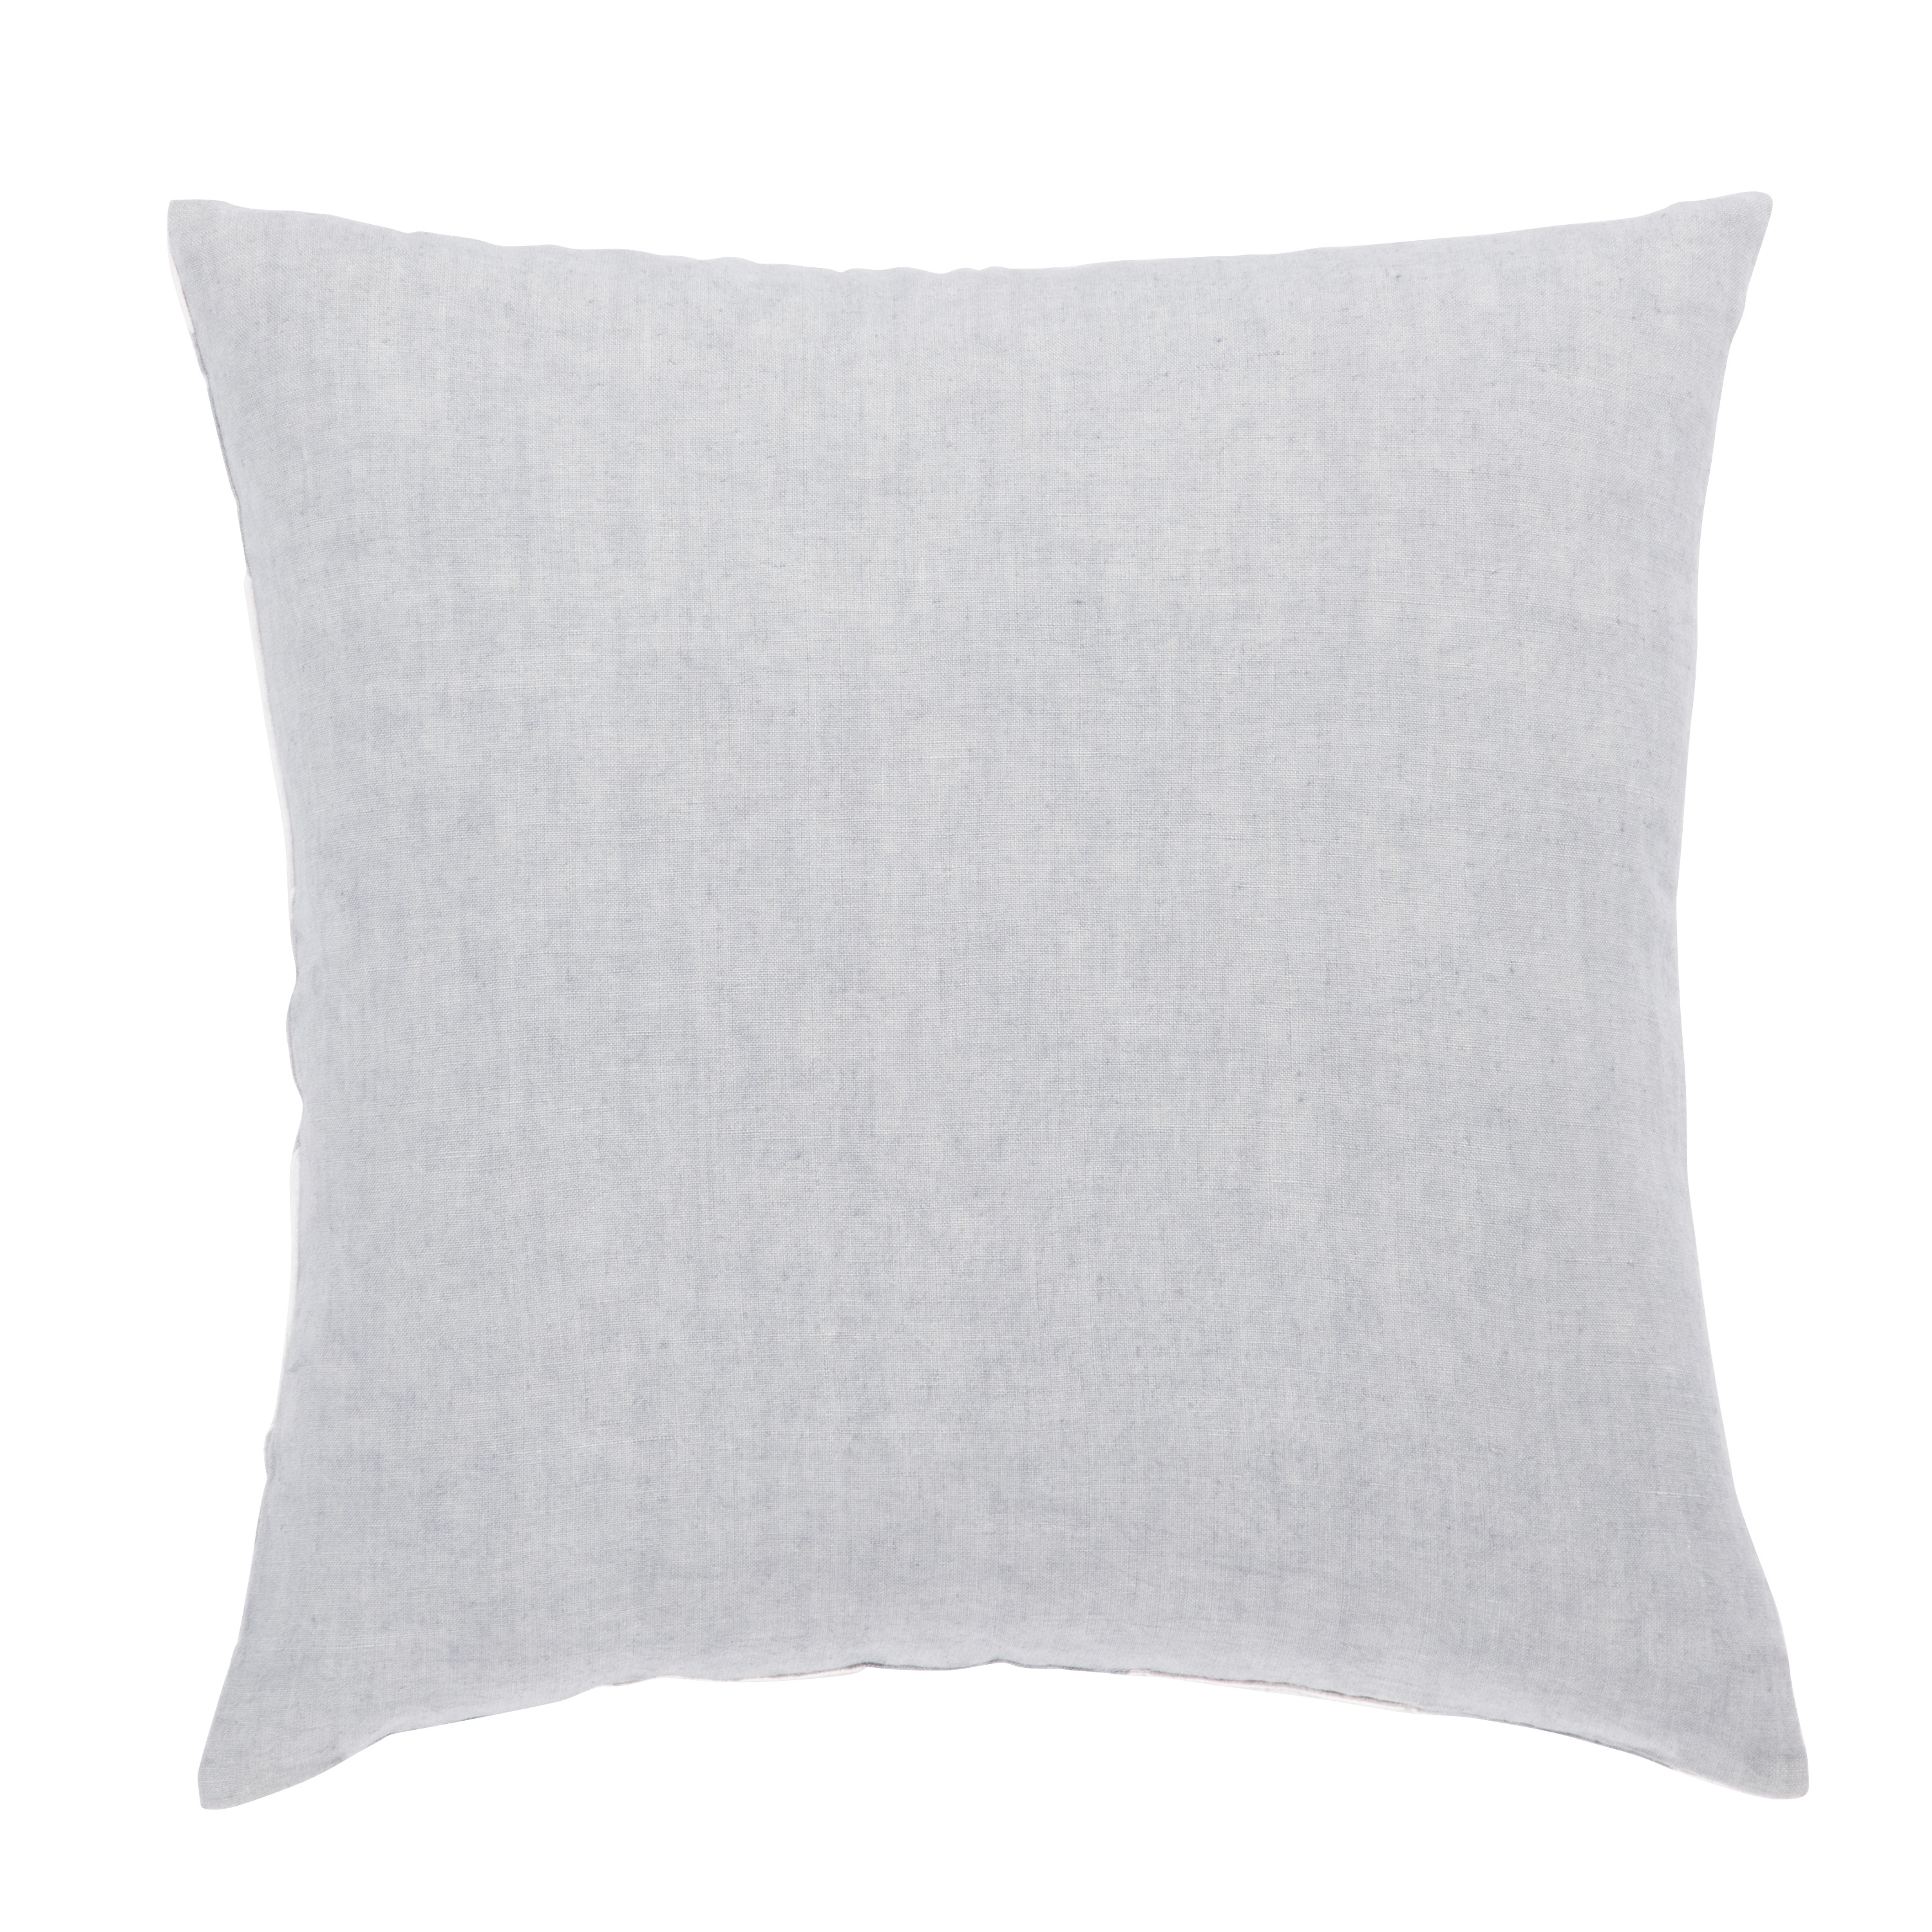 Design (US) Silver 22"X22" Pillow - Image 1